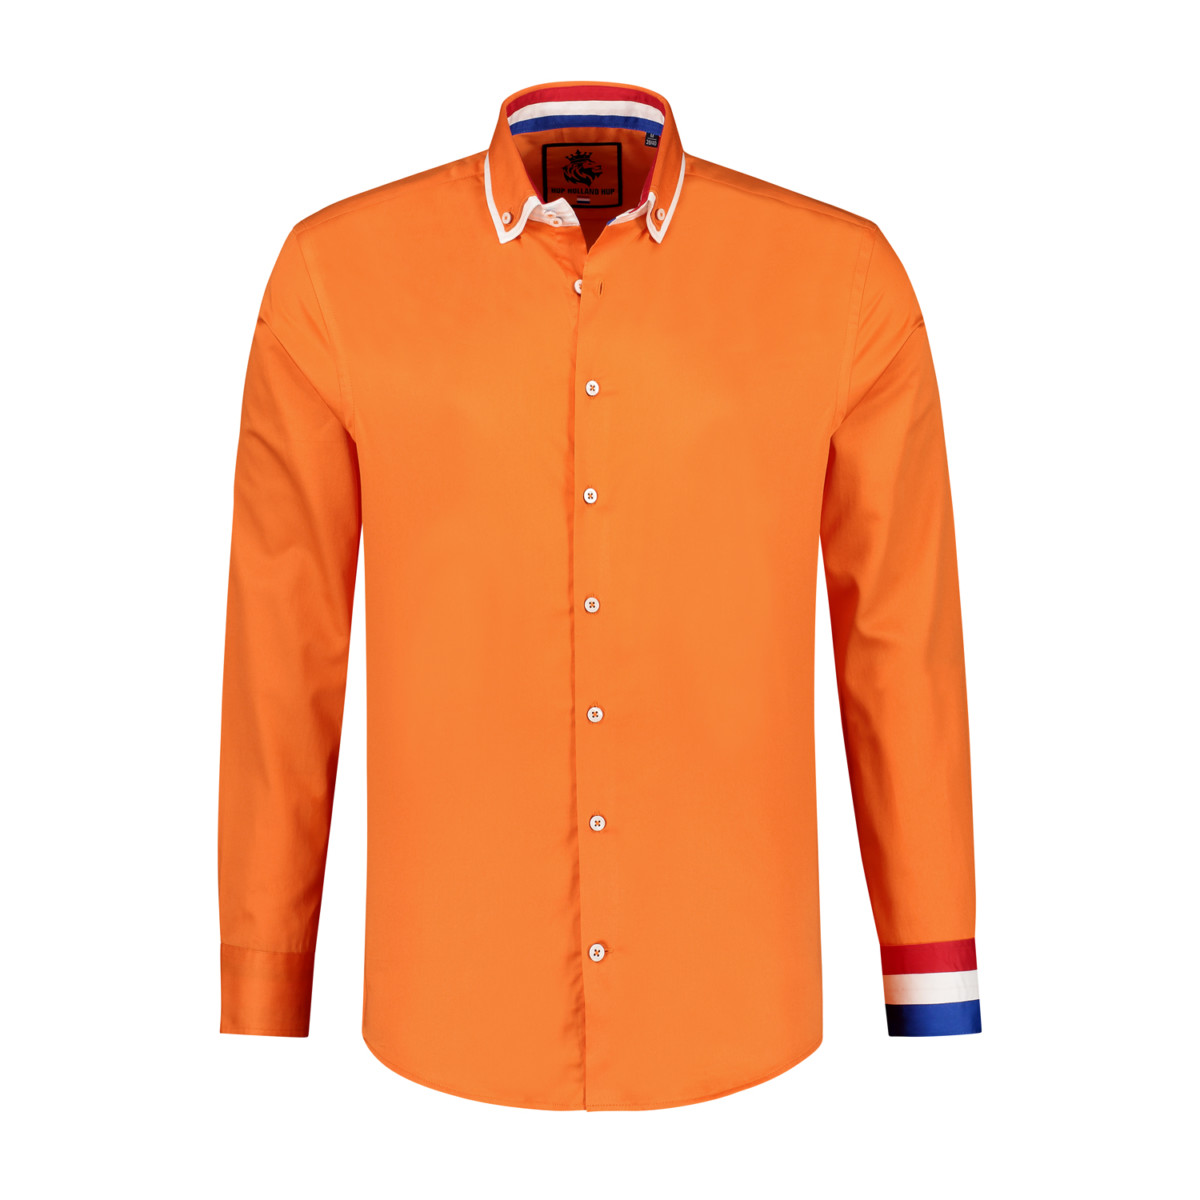 cultuur Umeki Outlook Oranje heren shirts (met vlag) - Hup holland hup